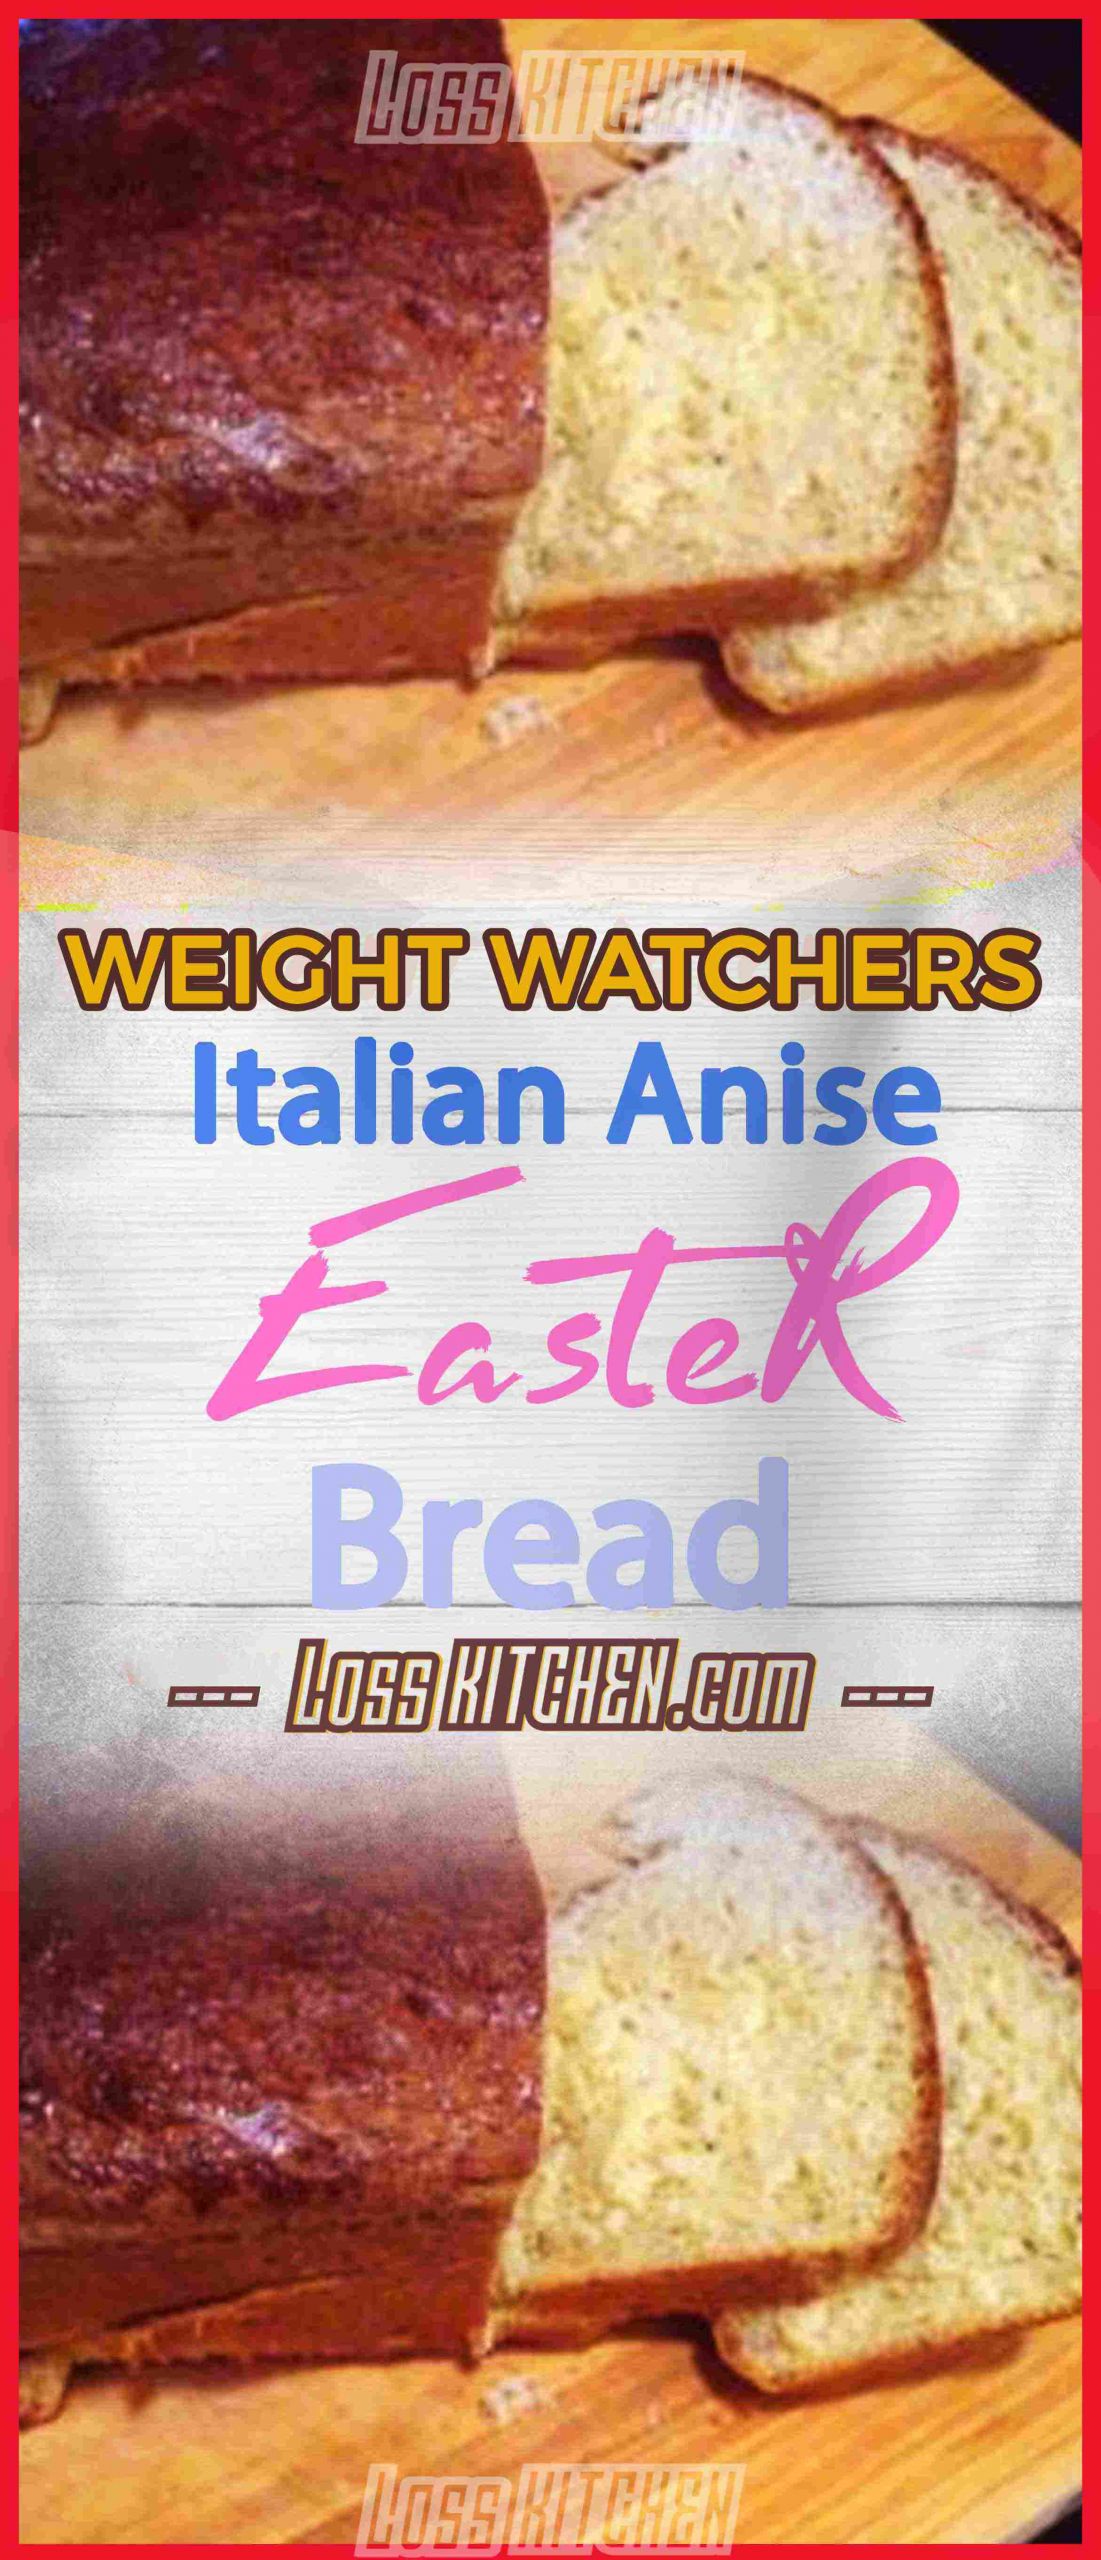 Anise Easter Bread
 Italian Anise Easter Bread Guilt Free Loss KITCHEN